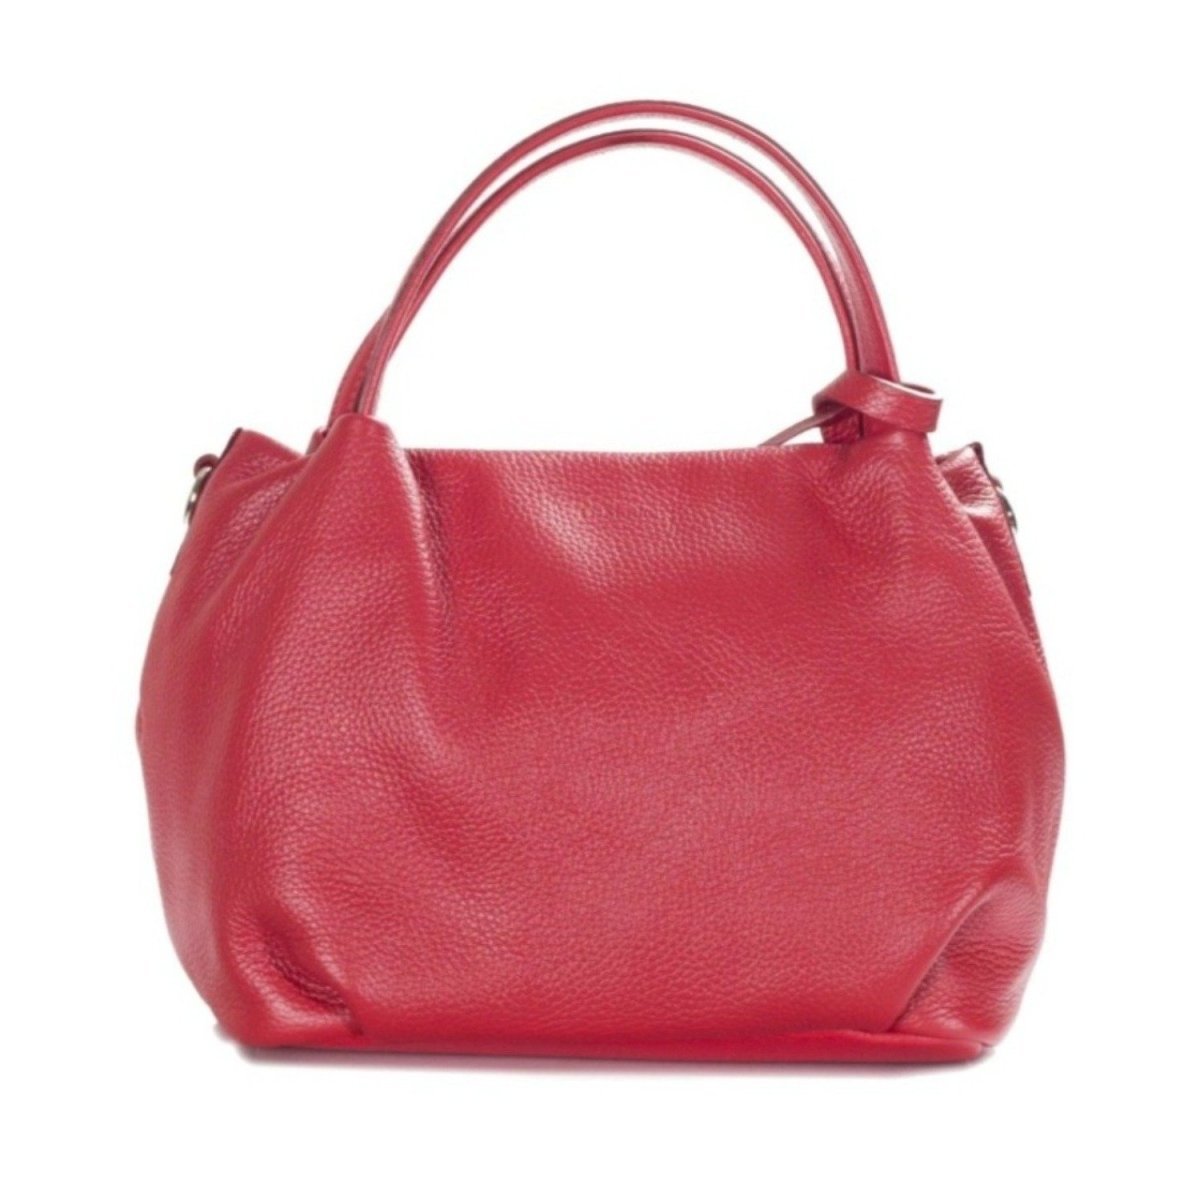 Selina Premium Pebbled Leather Handbag - Ozzell London